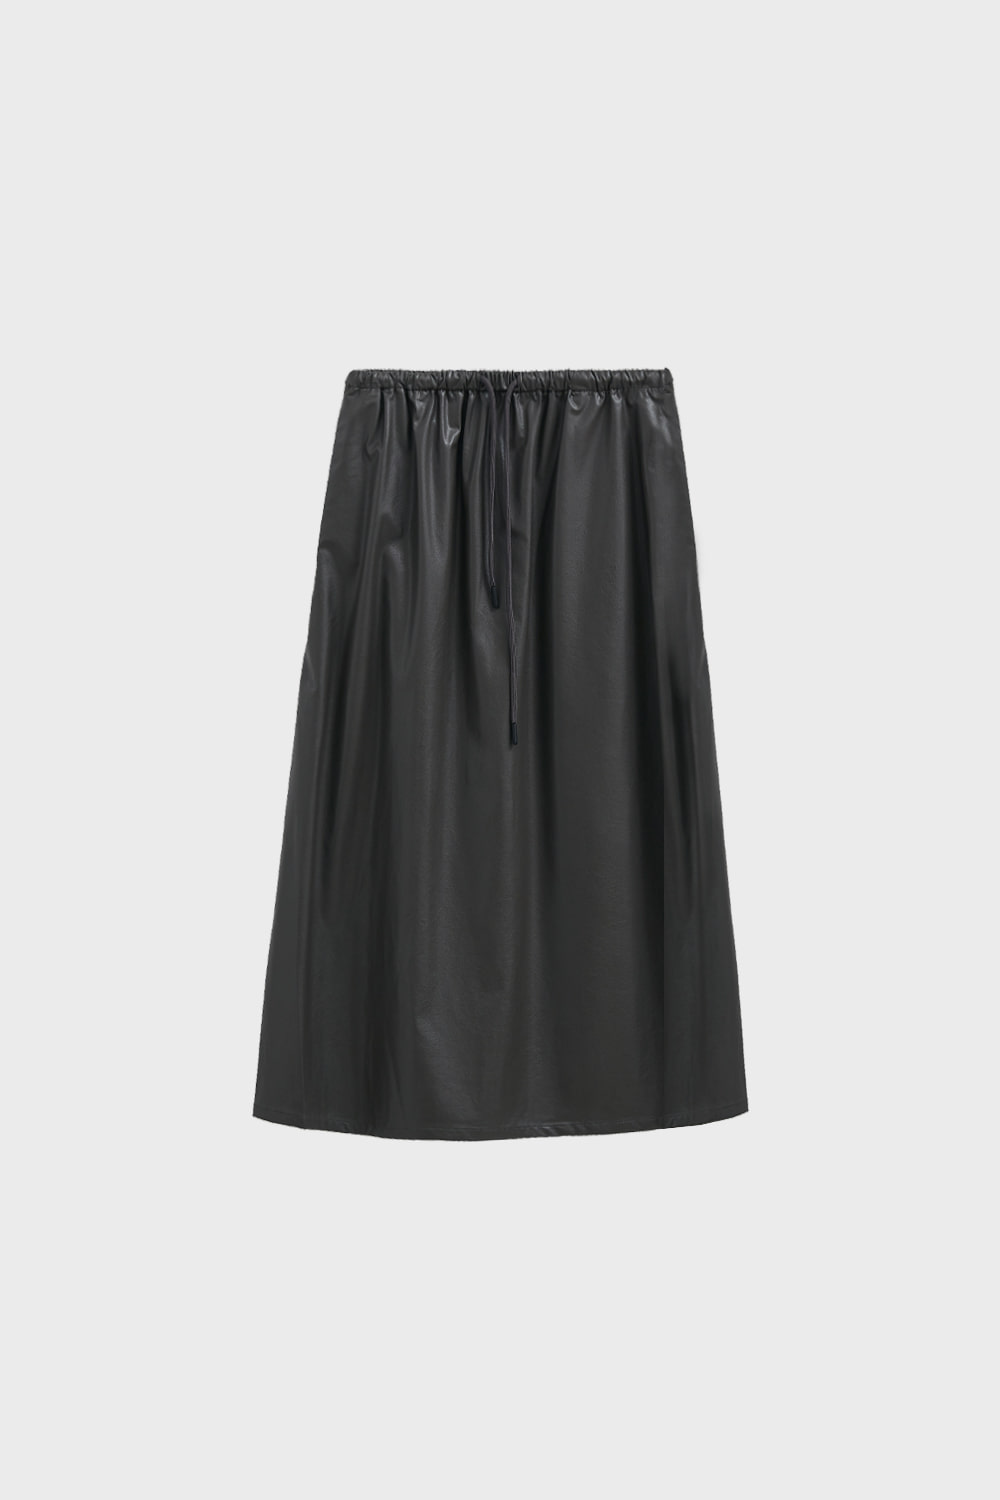 Fake Leather String Skirt